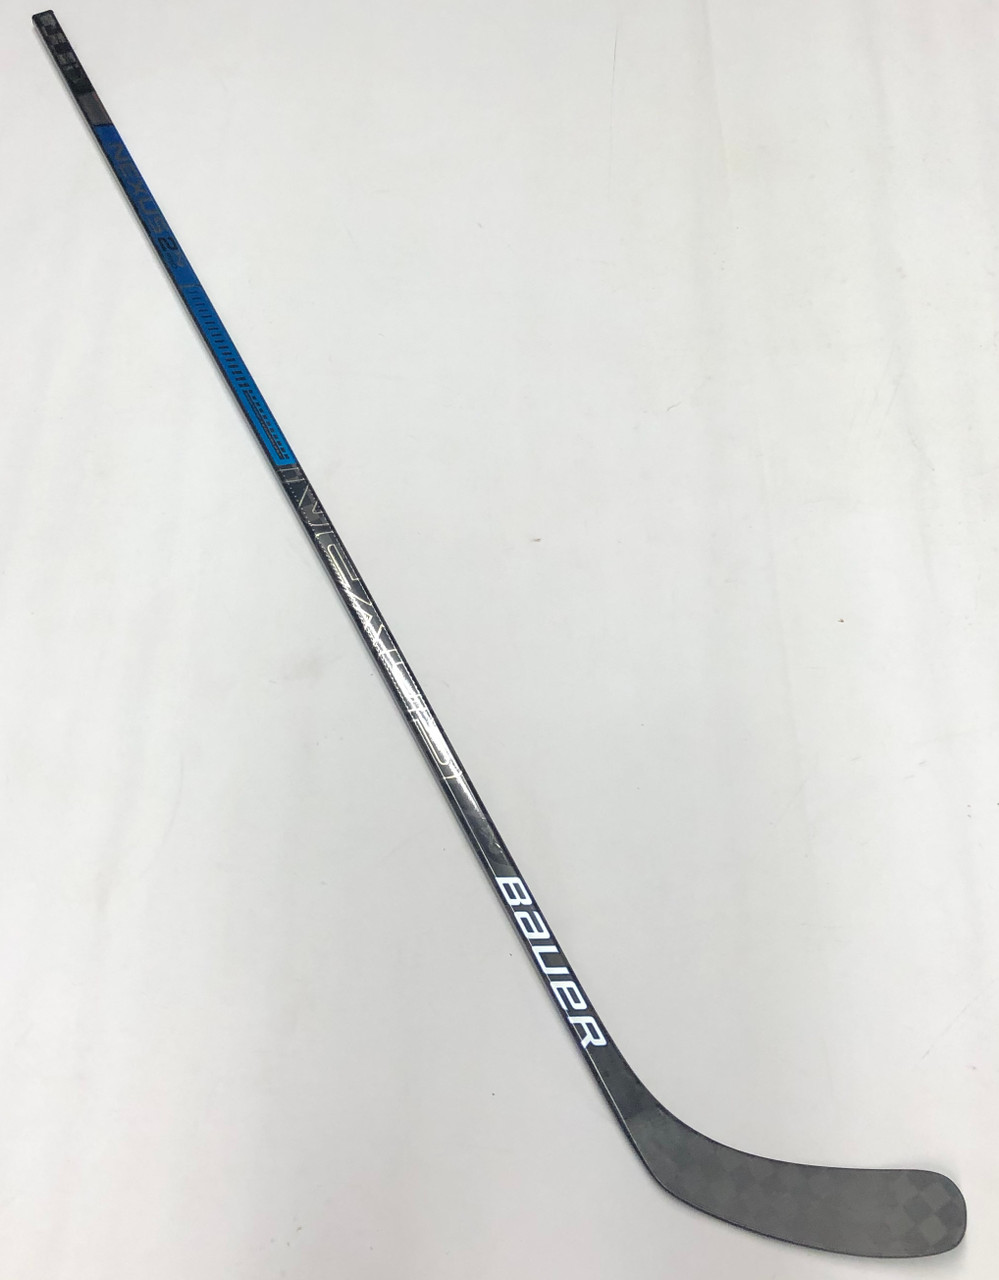 Bauer Nexus 1NXL Pro LH Pro Stock Hockey Stick 102 Flex P92 NHL BARKOV -  DK's Hockey Shop